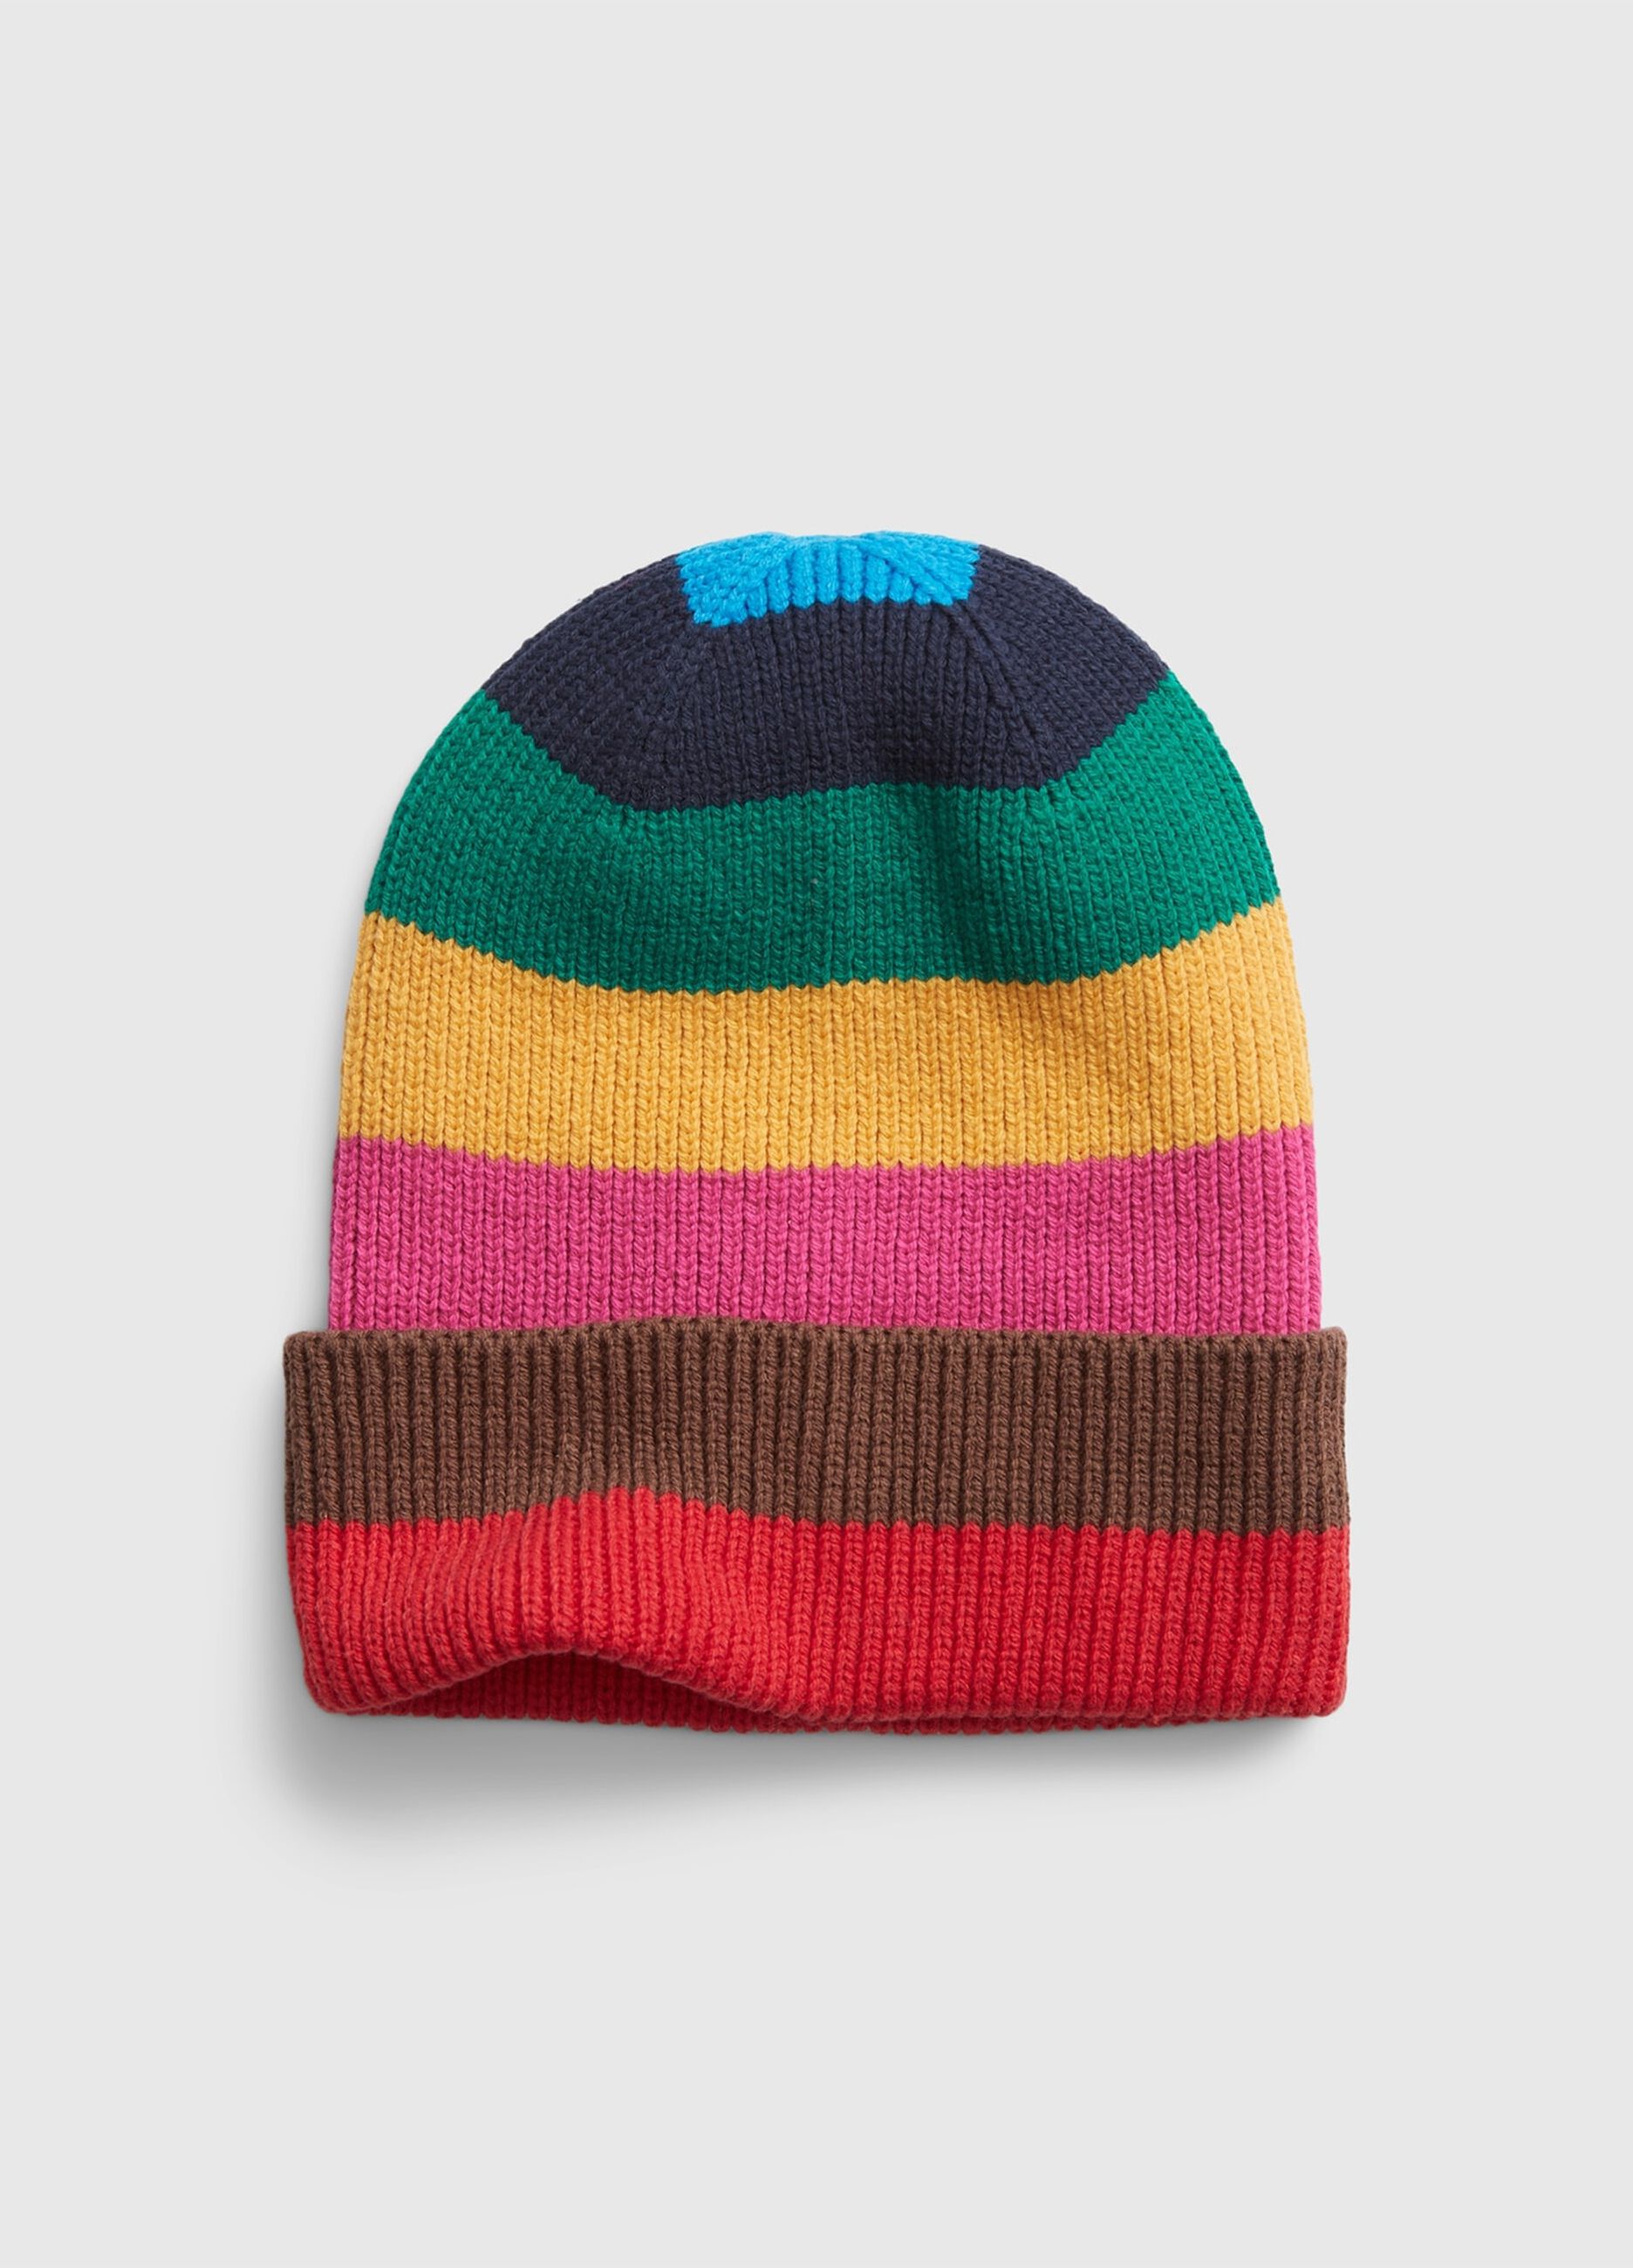 Hat with Happy Stripe pattern